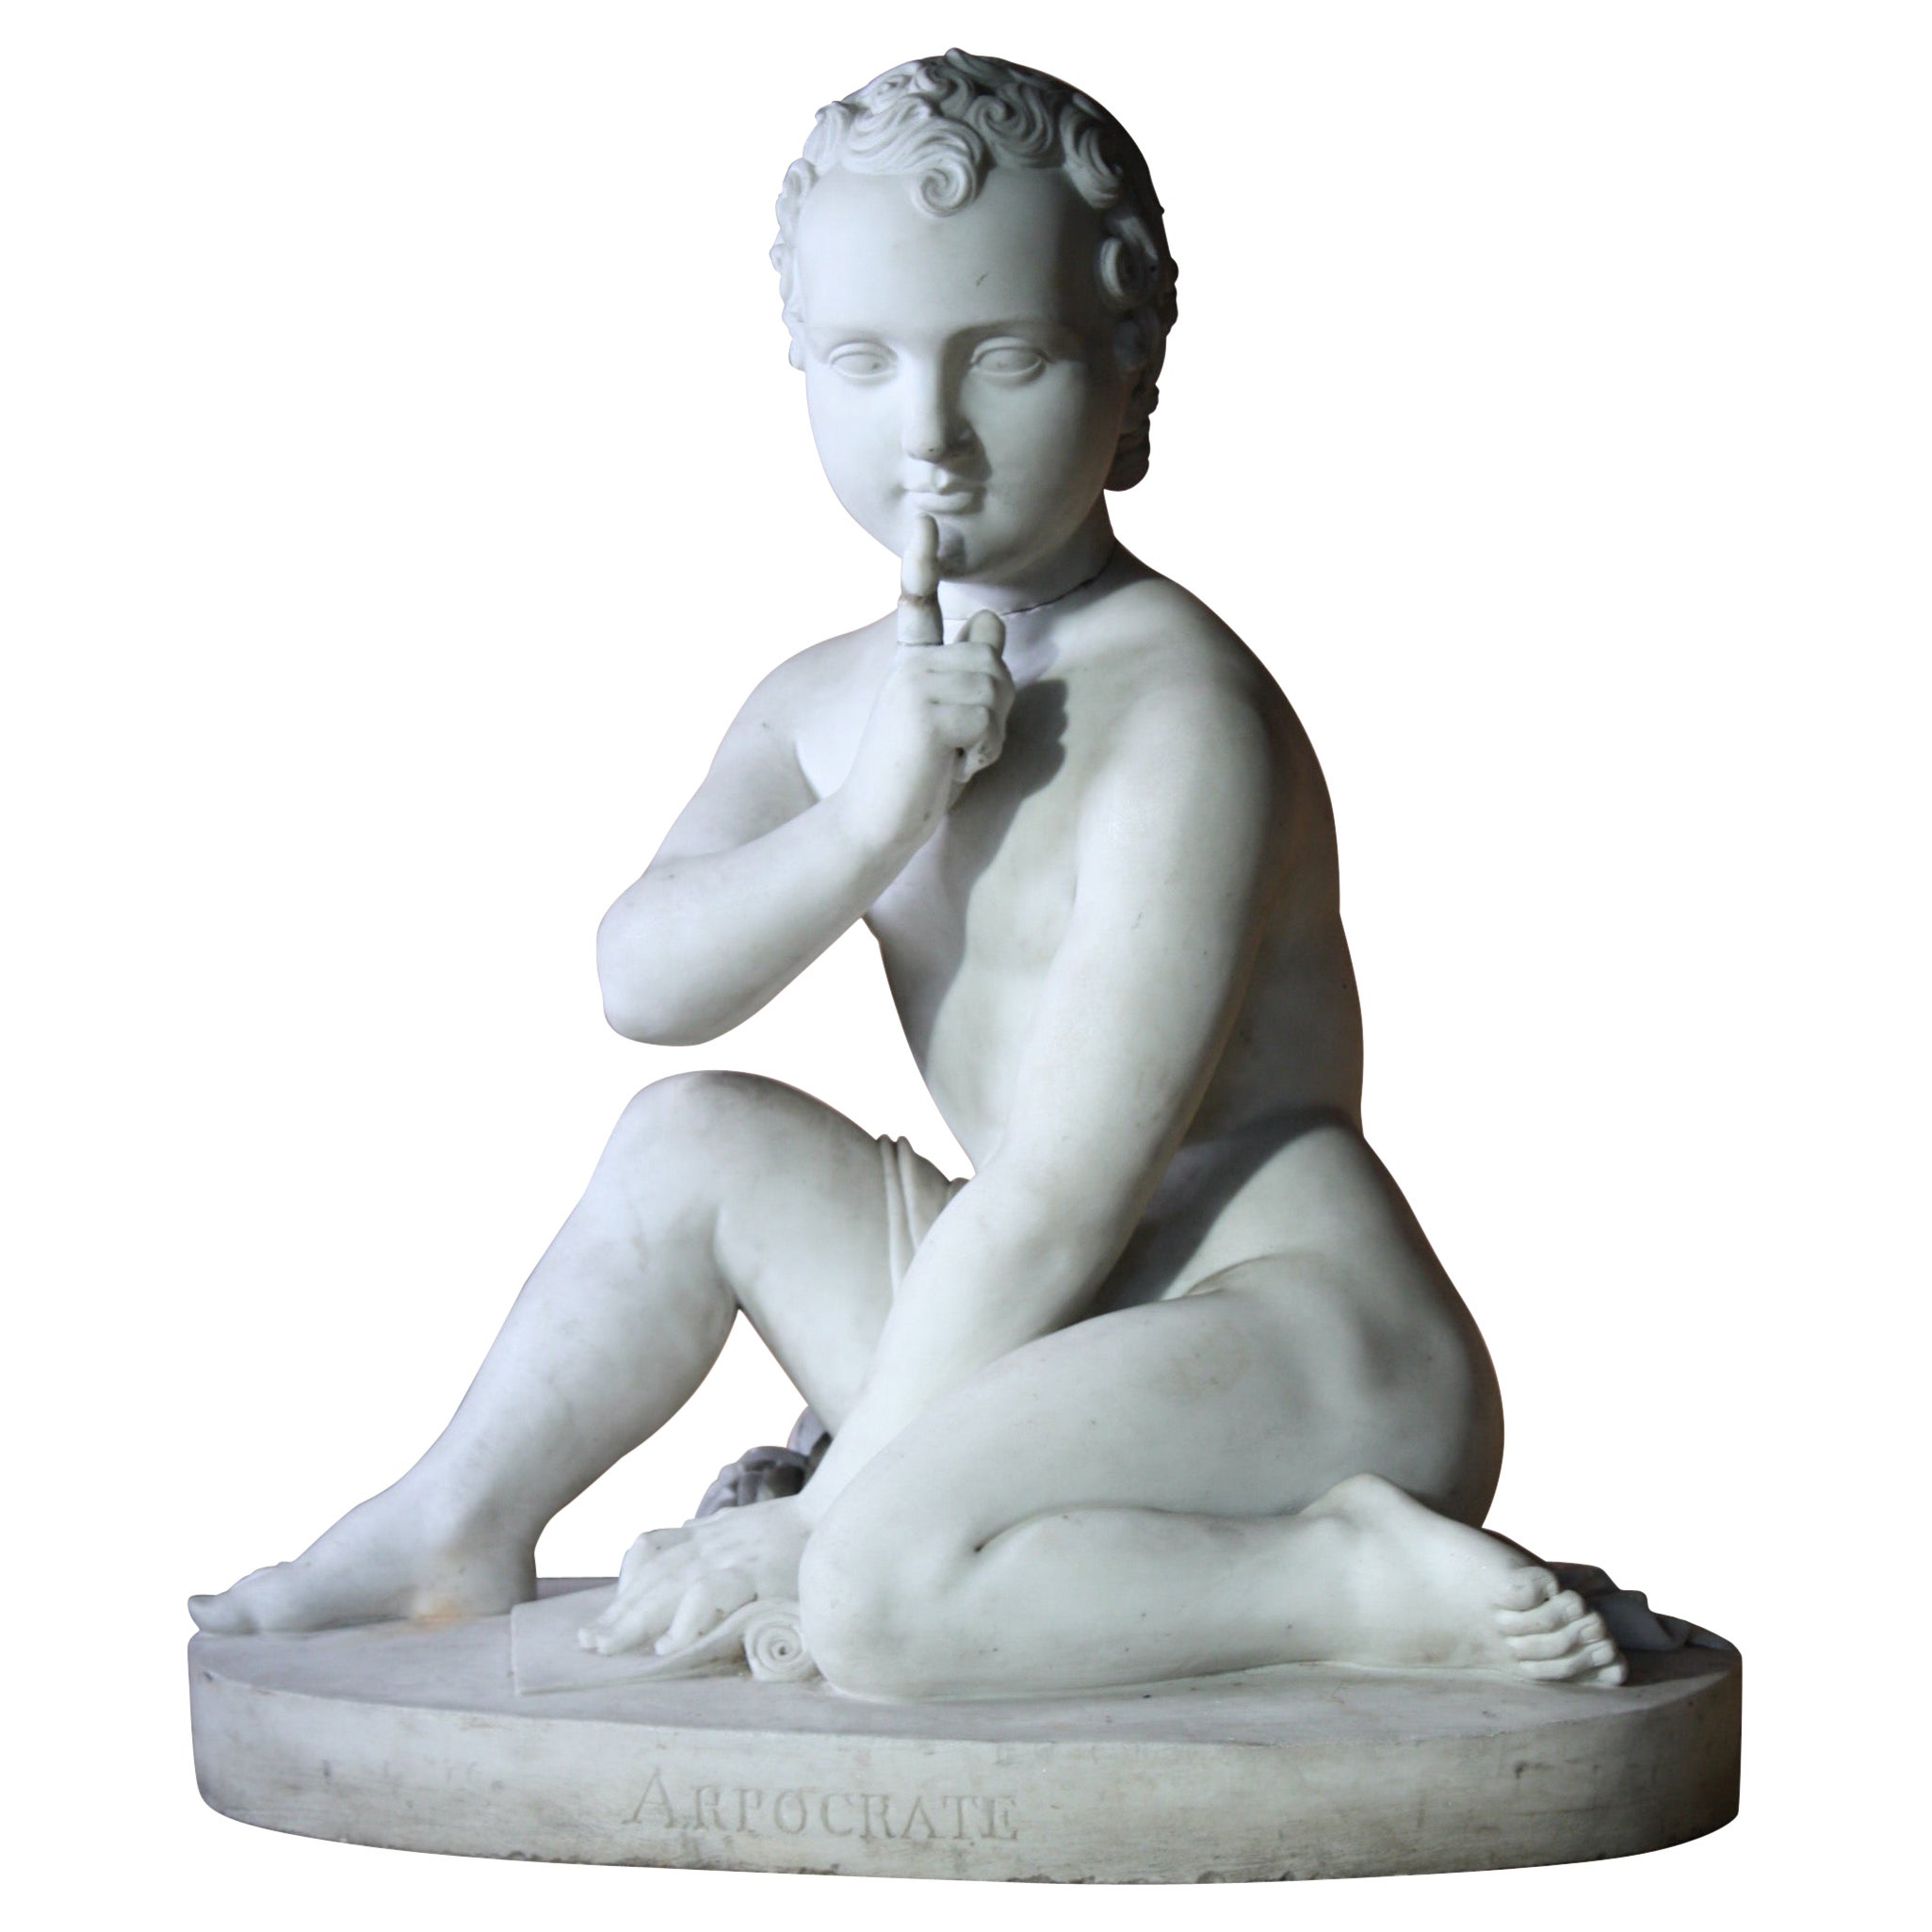 Early 19th Century Sculptor Francesco Pozzi "Arpocrate"